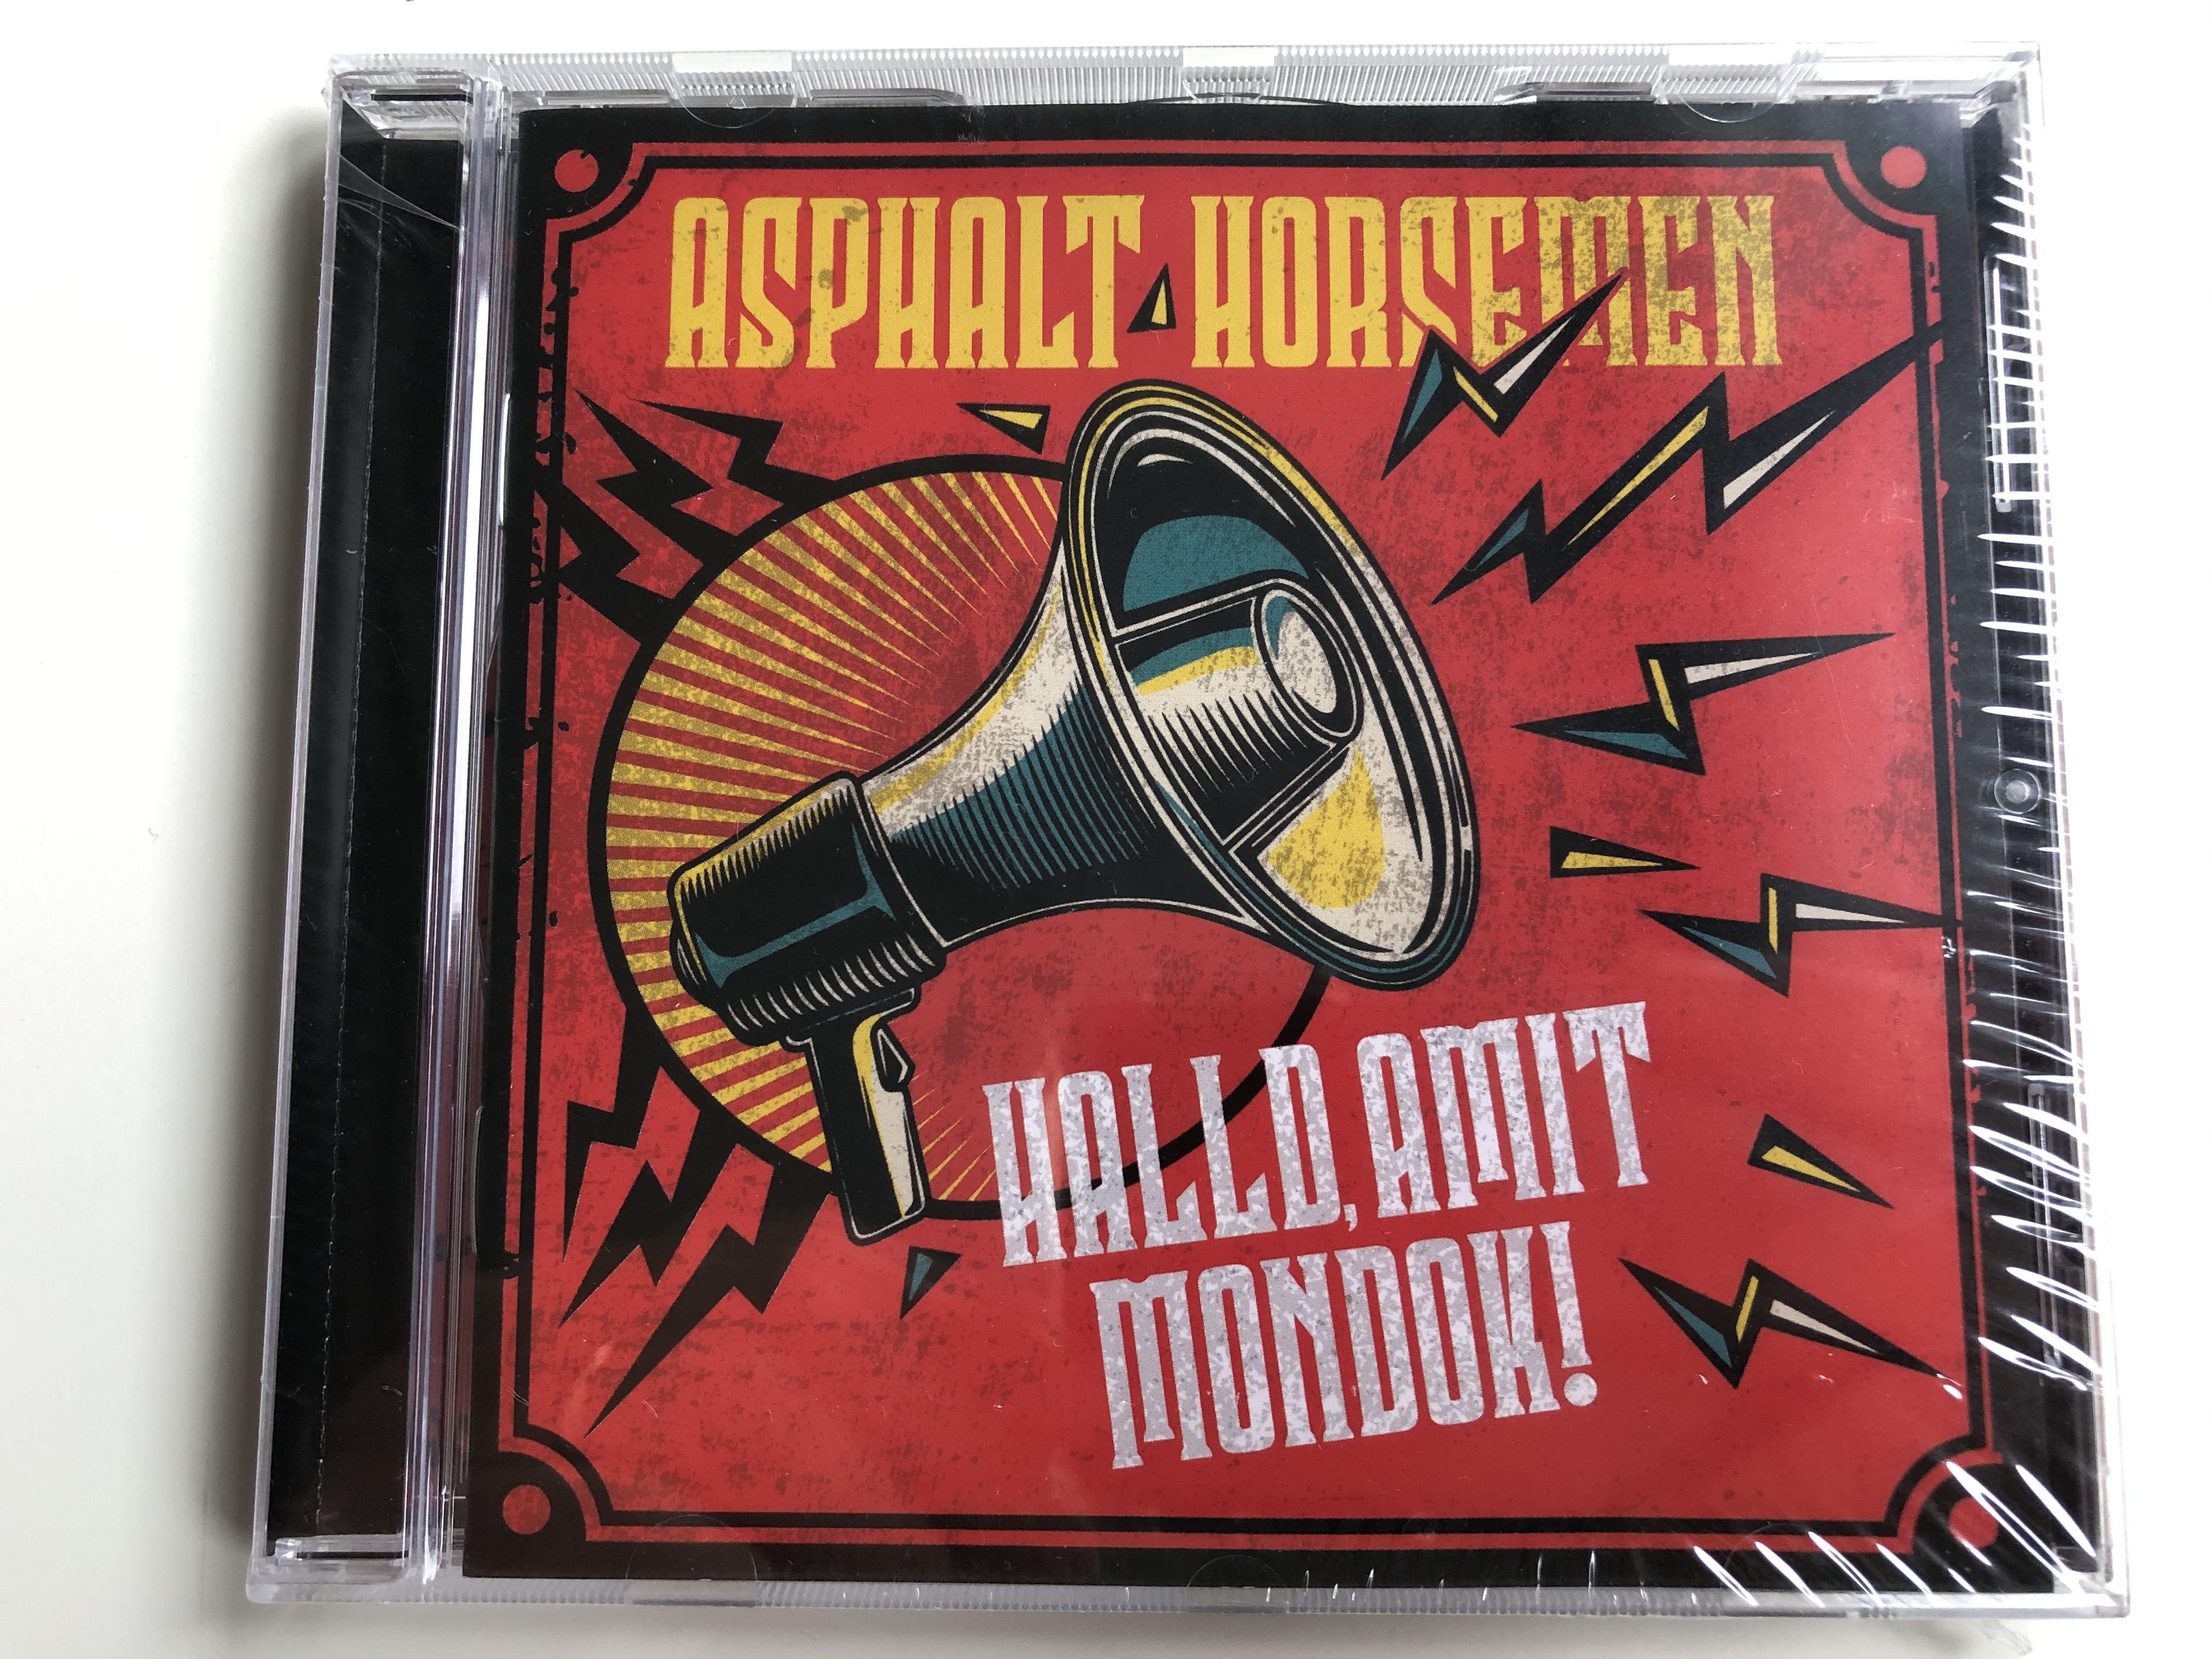 asphalt-horsemen-halld-amit-mondok-grundrecords-audio-cd-2019-gr140-1-.jpg